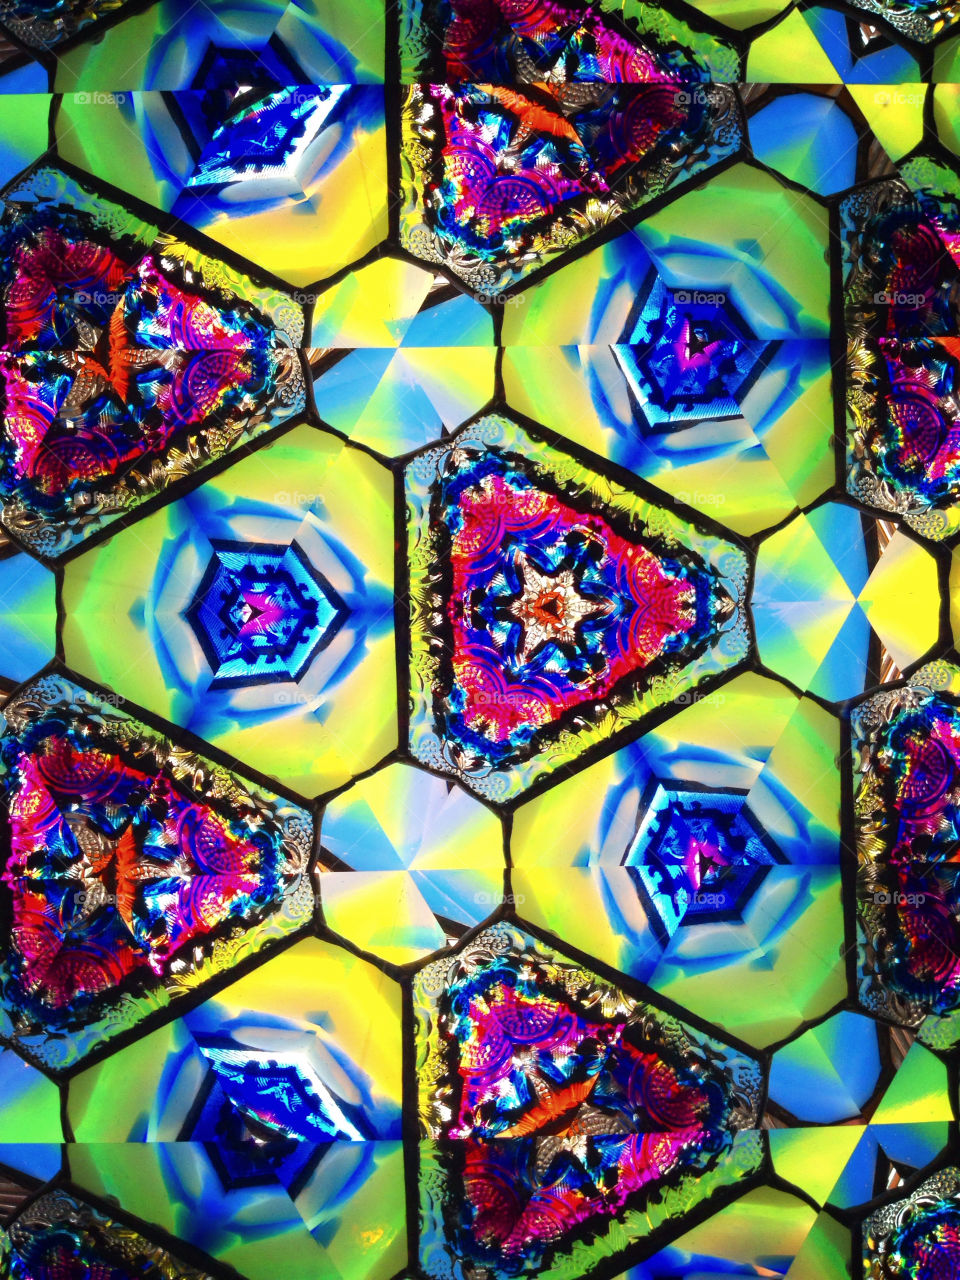 Through a kaleidoscope